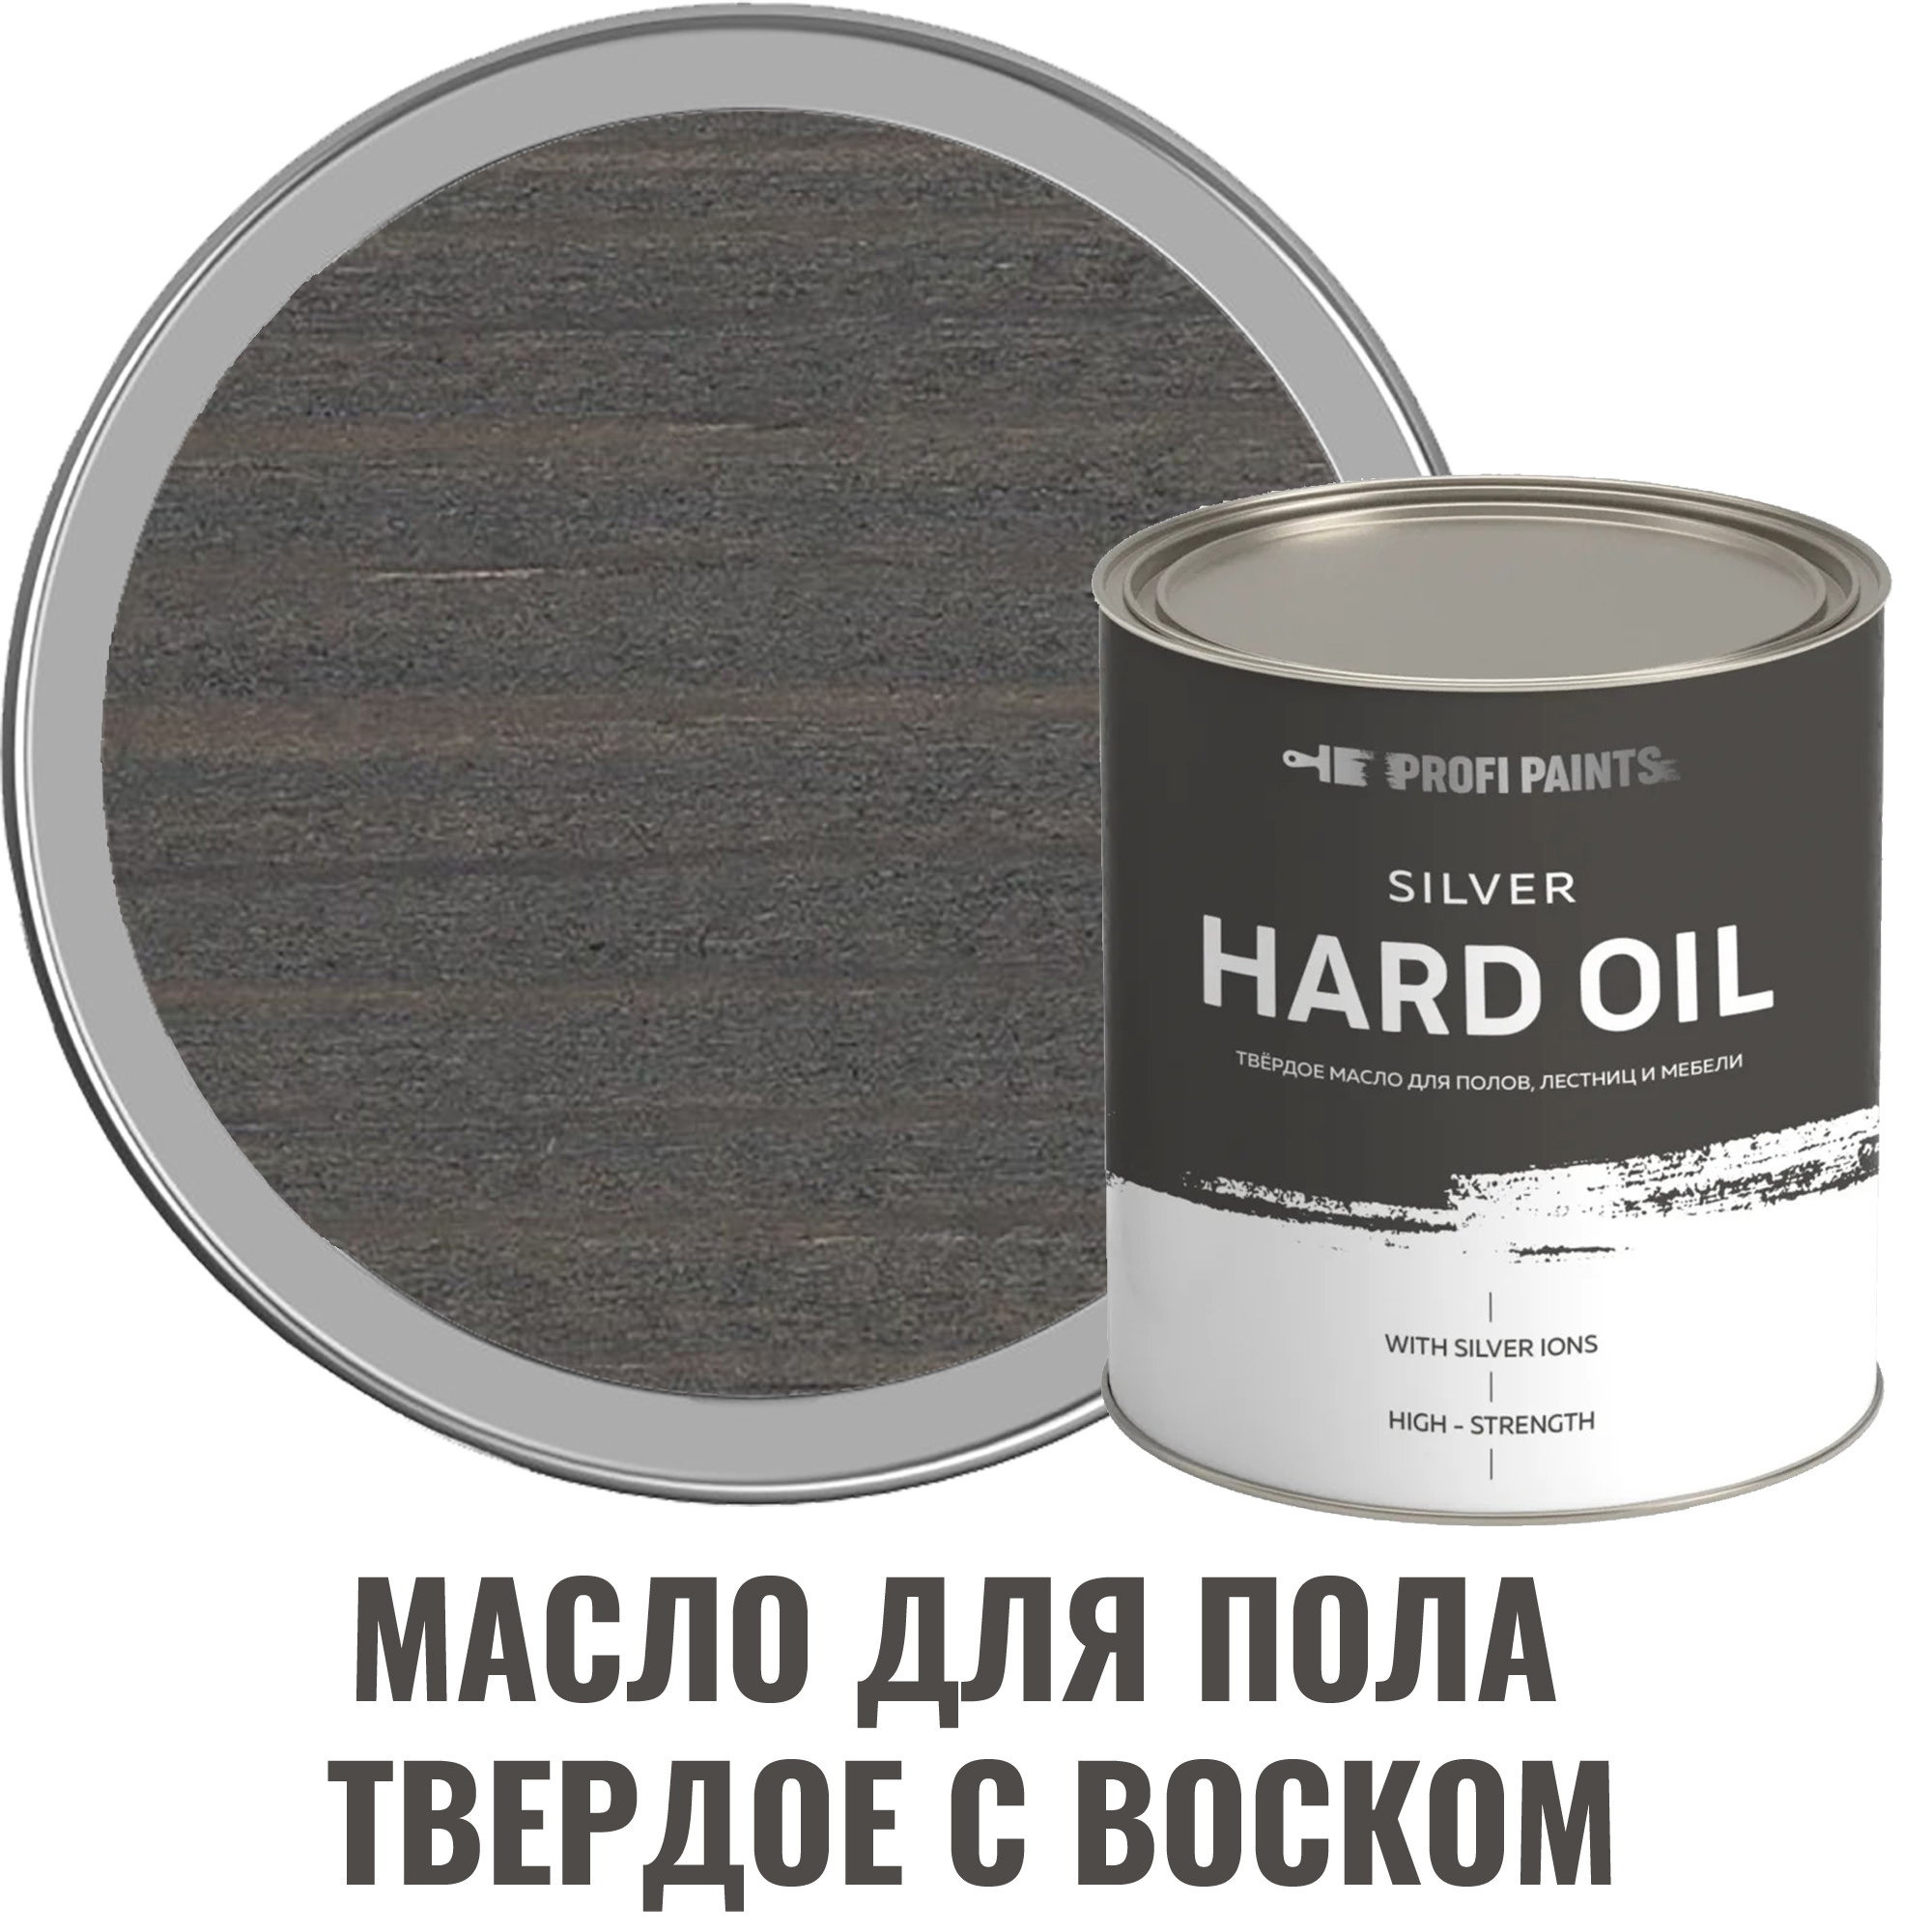 91095496 Масло для пола 10764_D Silver Hard Oil цвет серо-синий 2.7 л STLM-0481850 PROFIPAINTS